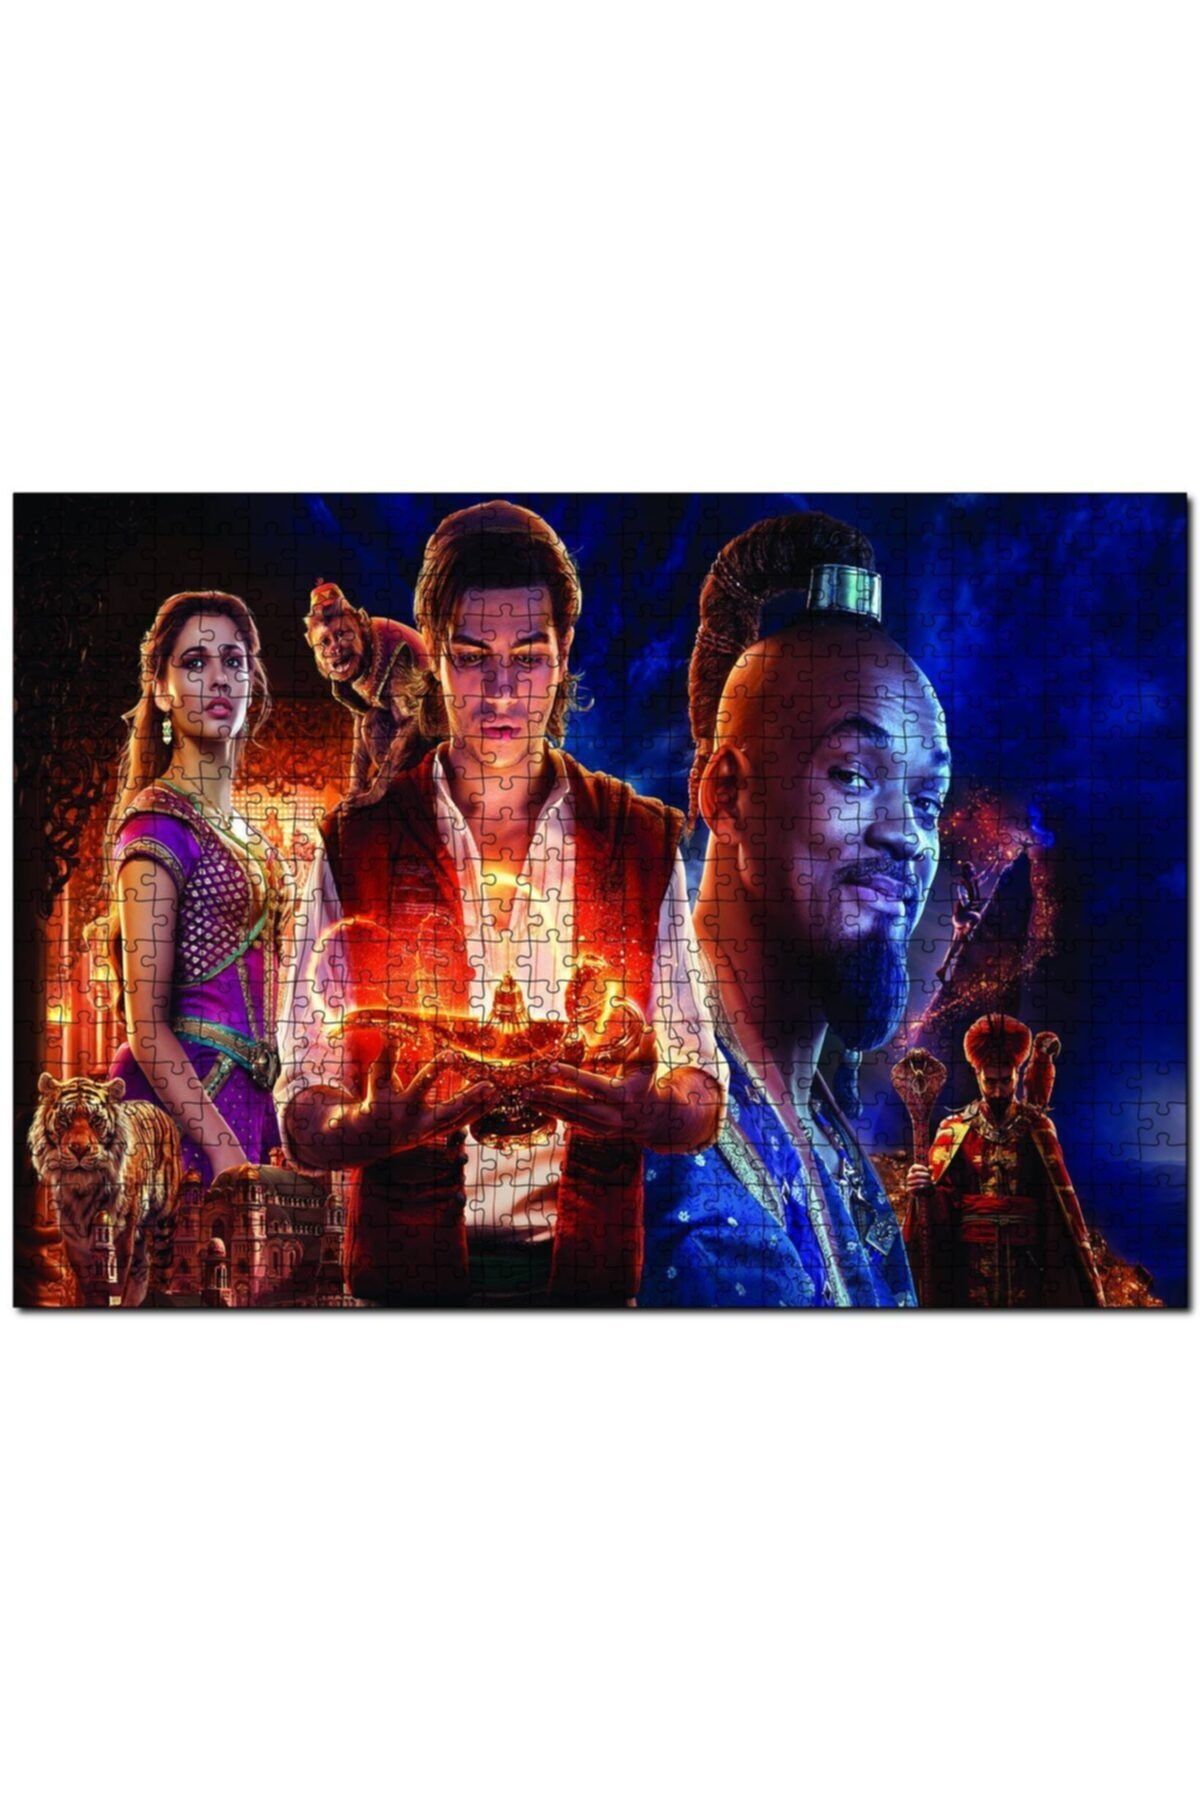 Cakapuzzle Aladdin, Cin Ve Prenses Film Görseli 1000 Parça Puzzle Yapboz Mdf(ahşap)